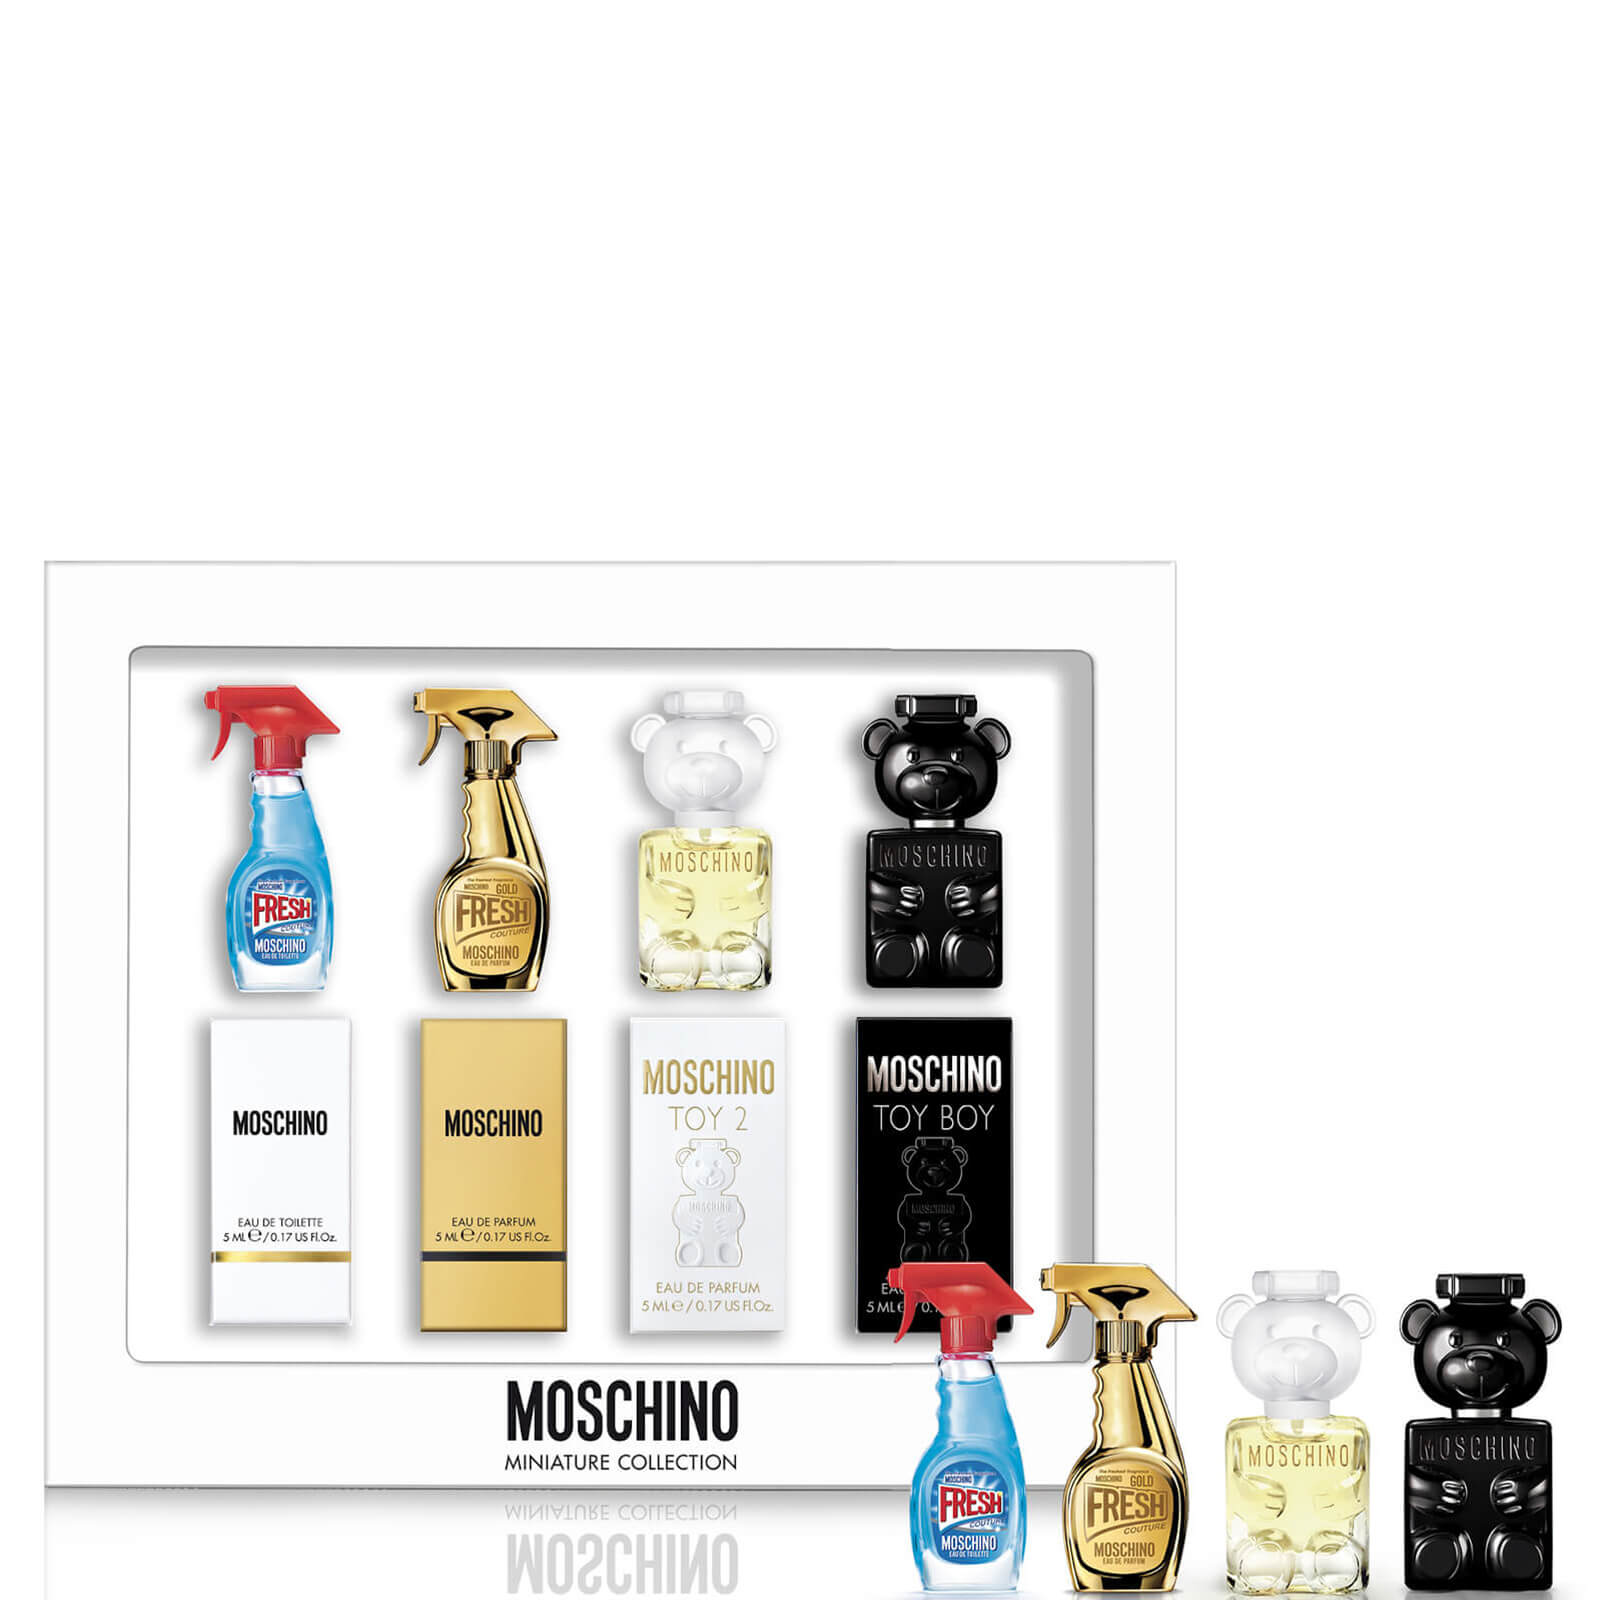 Moschino Mini parfume Set. Духи Москино 5 мл миниатюра. Набор миниатюр духов Moschino. Moschino Toy 2 миниатюра 5 мл.